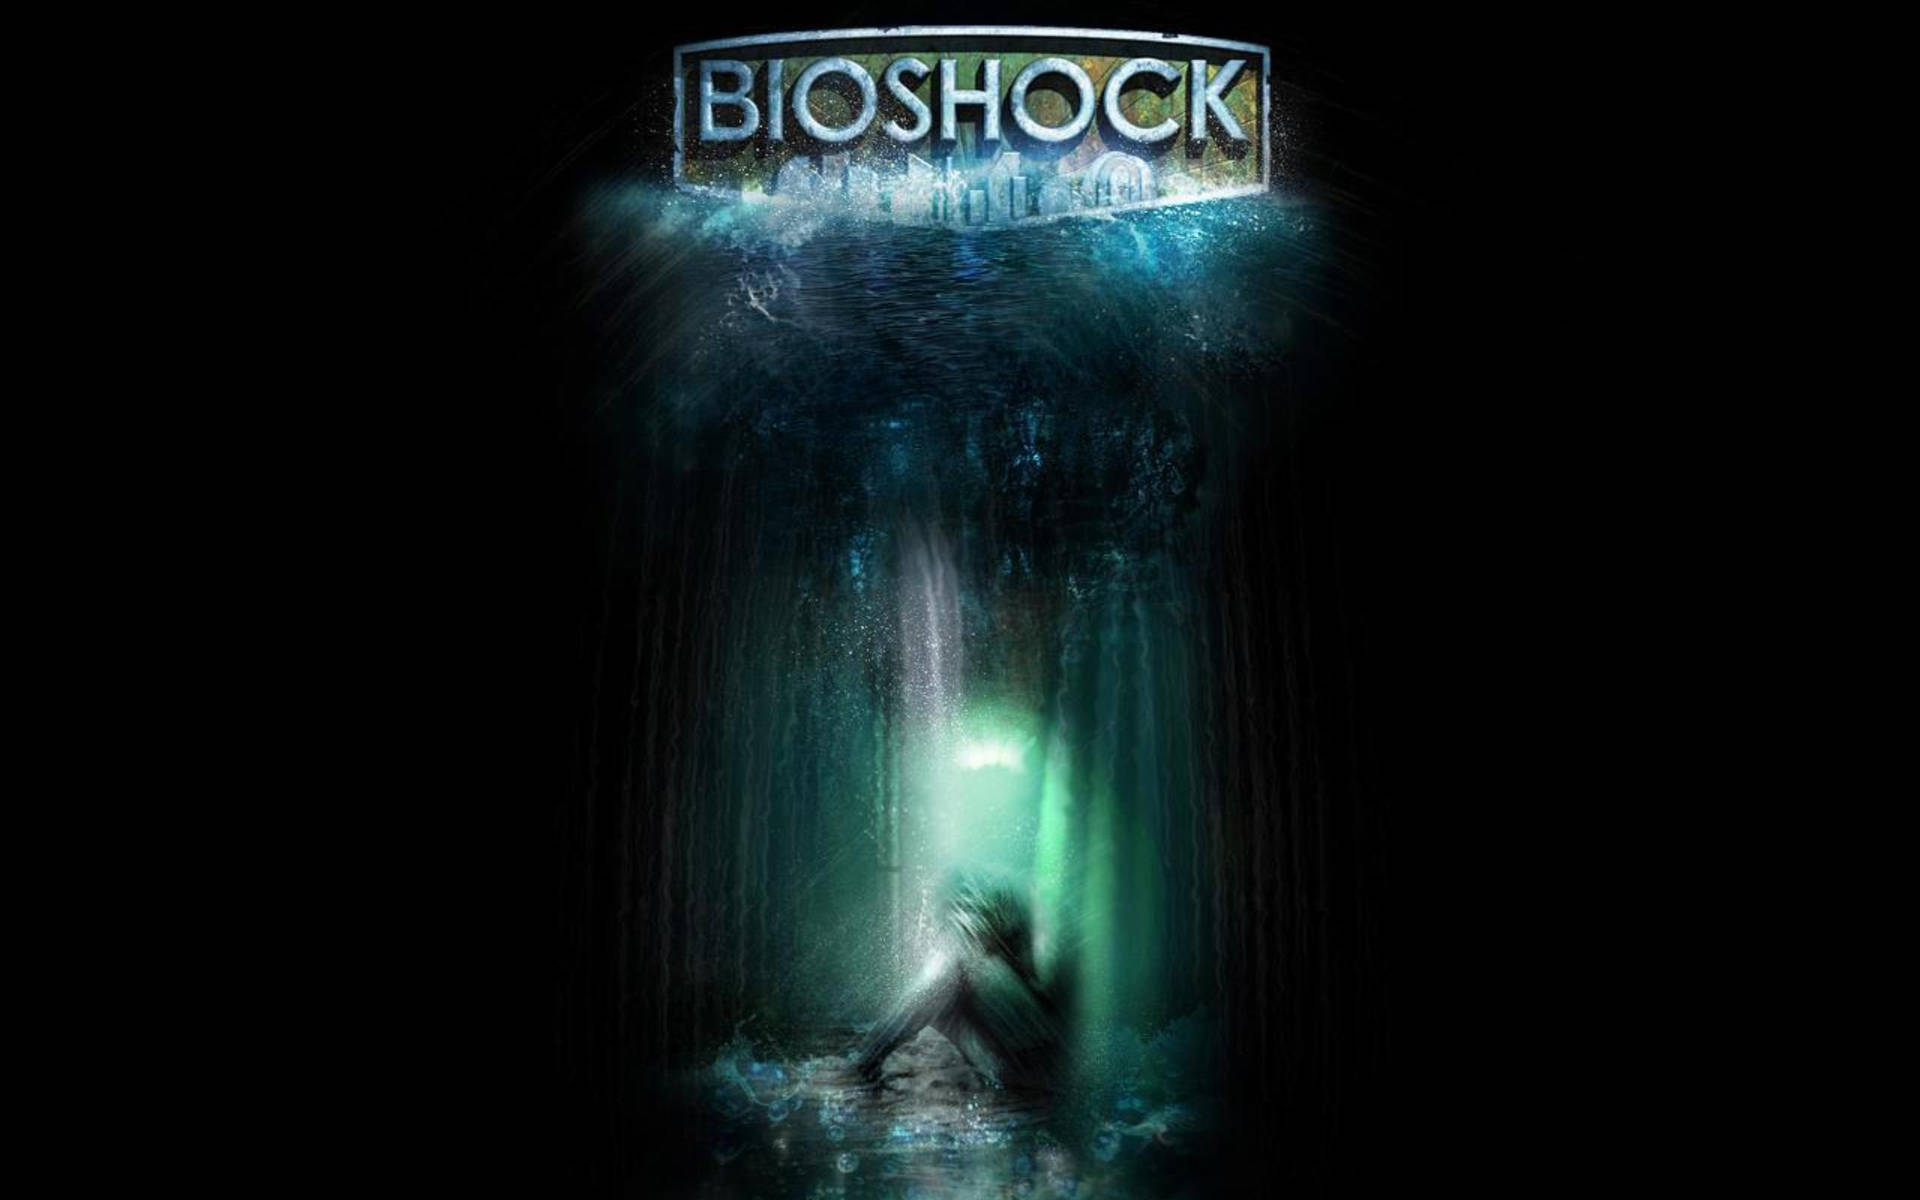 Bioshock 4k Sott'acqua Sfondo